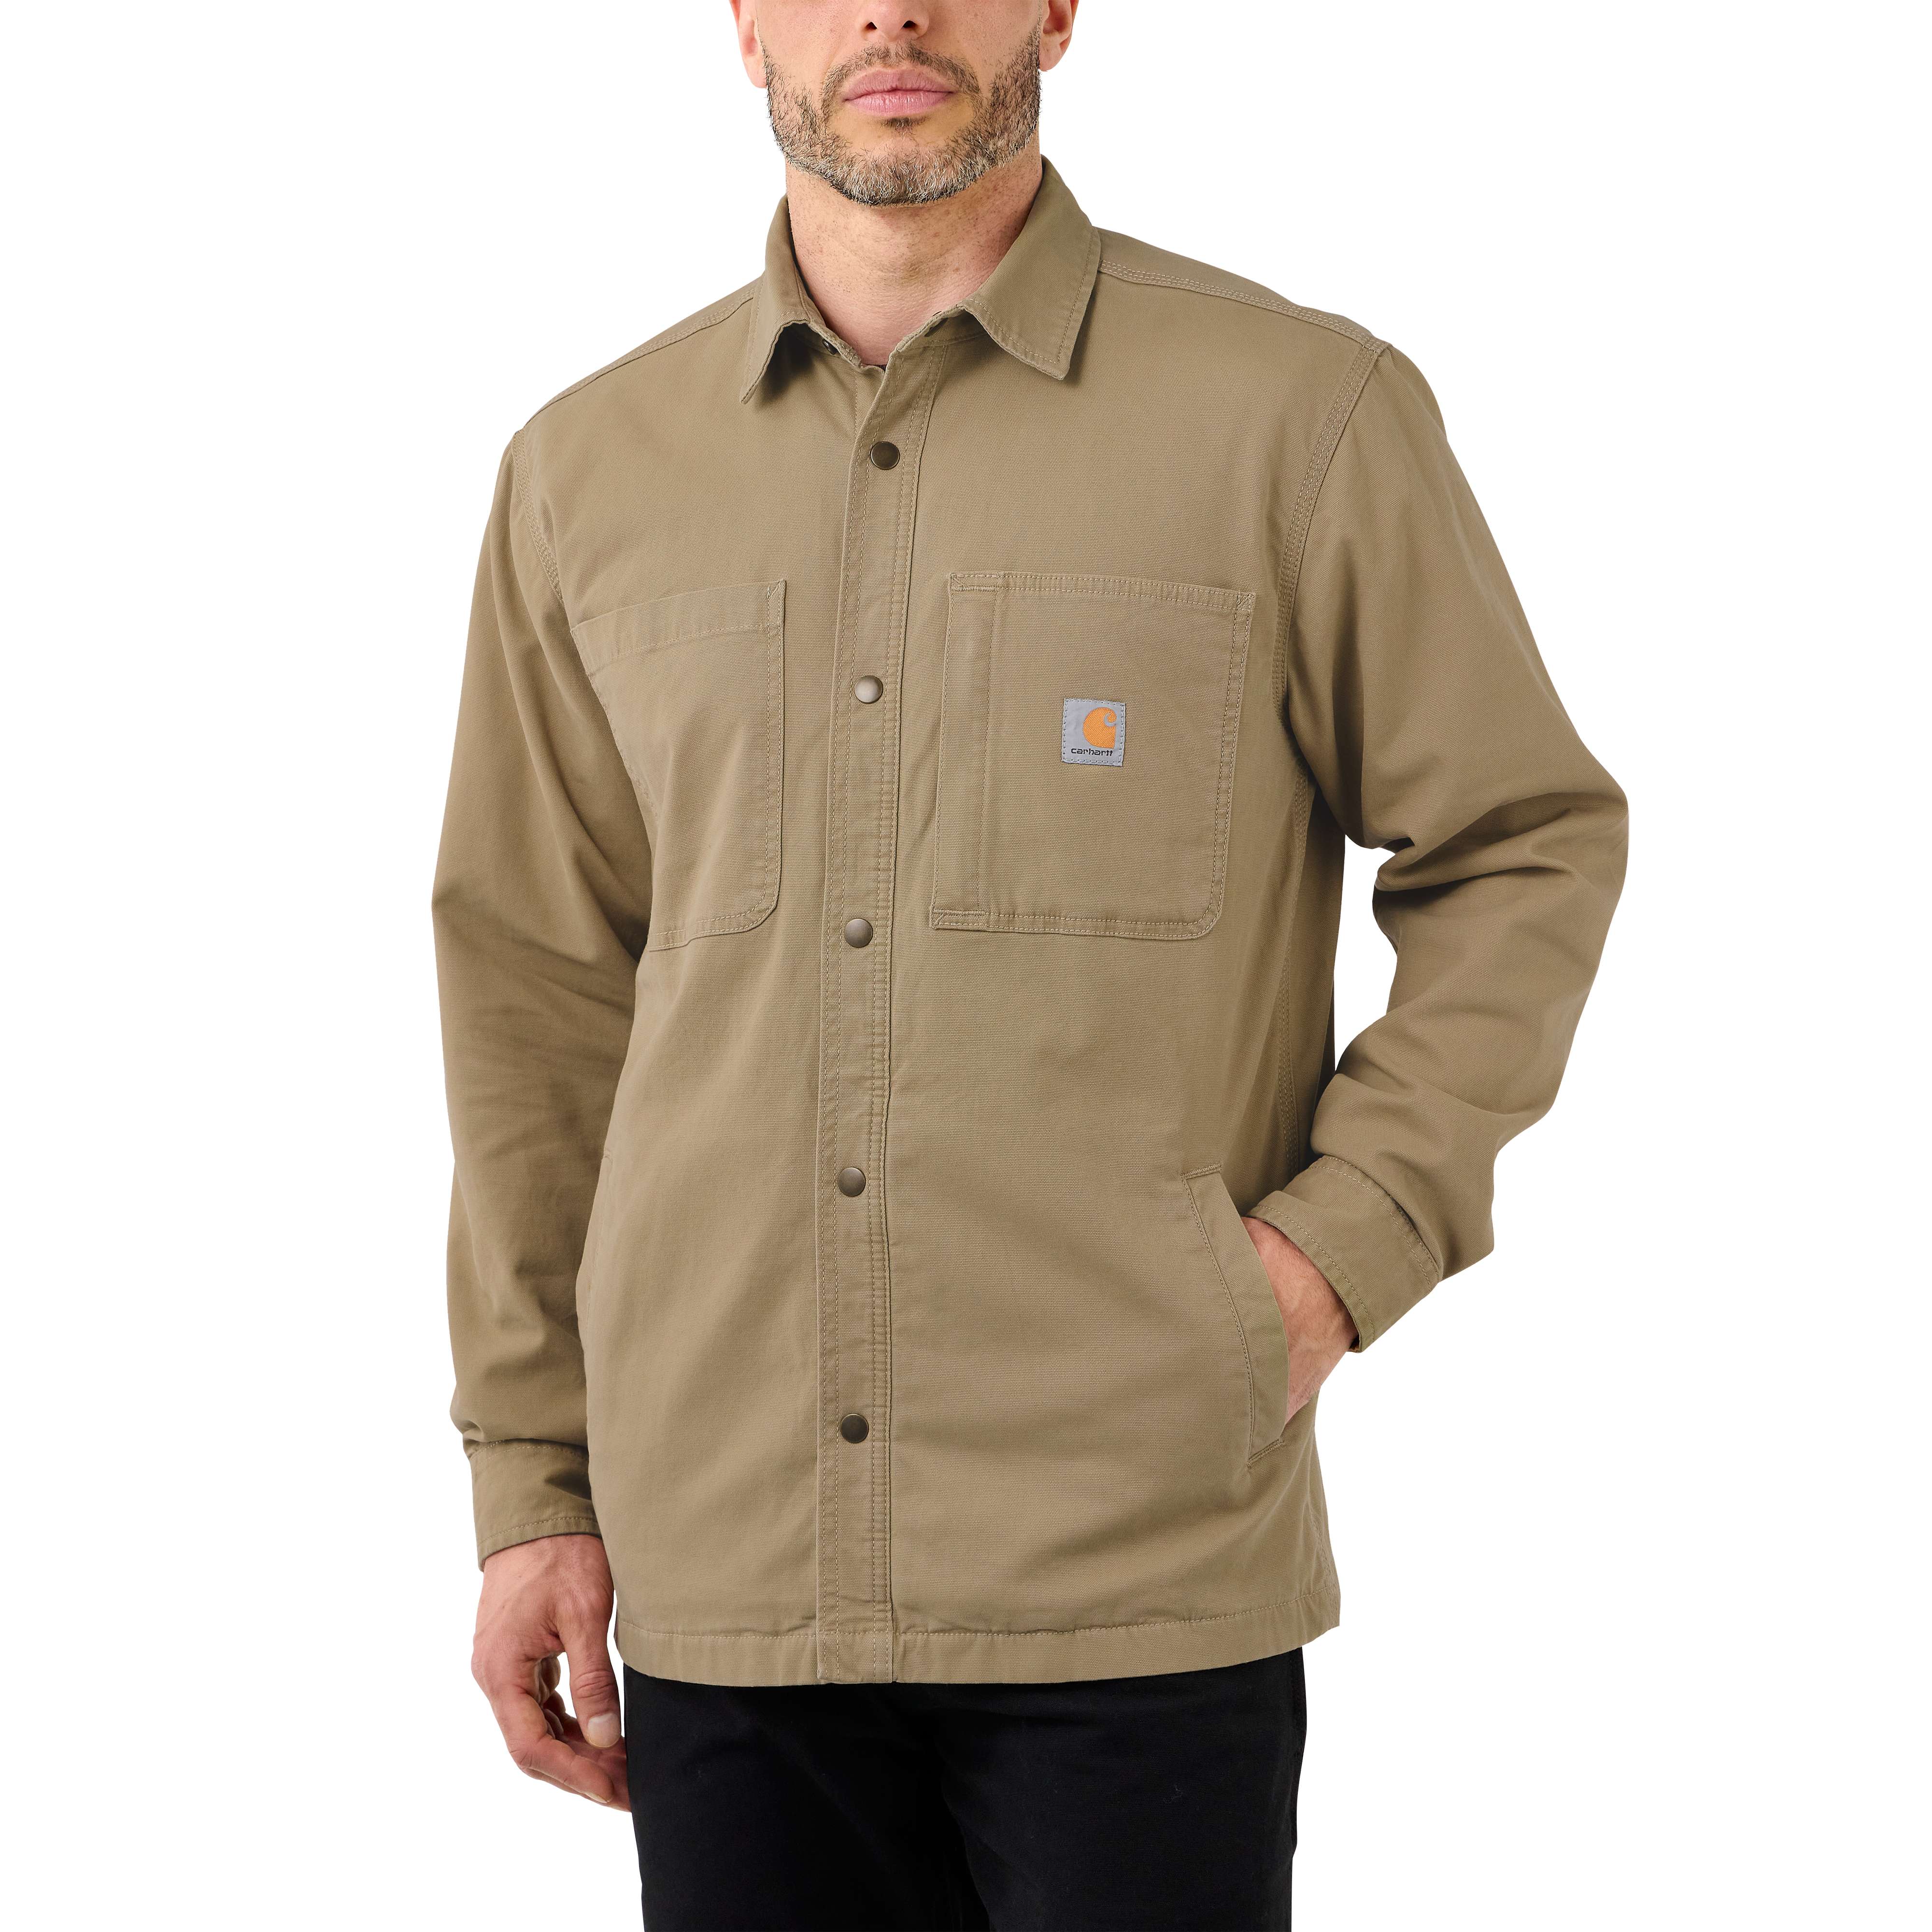 Carhartt WIP Men's Shirt - Brown - Casual Shirts